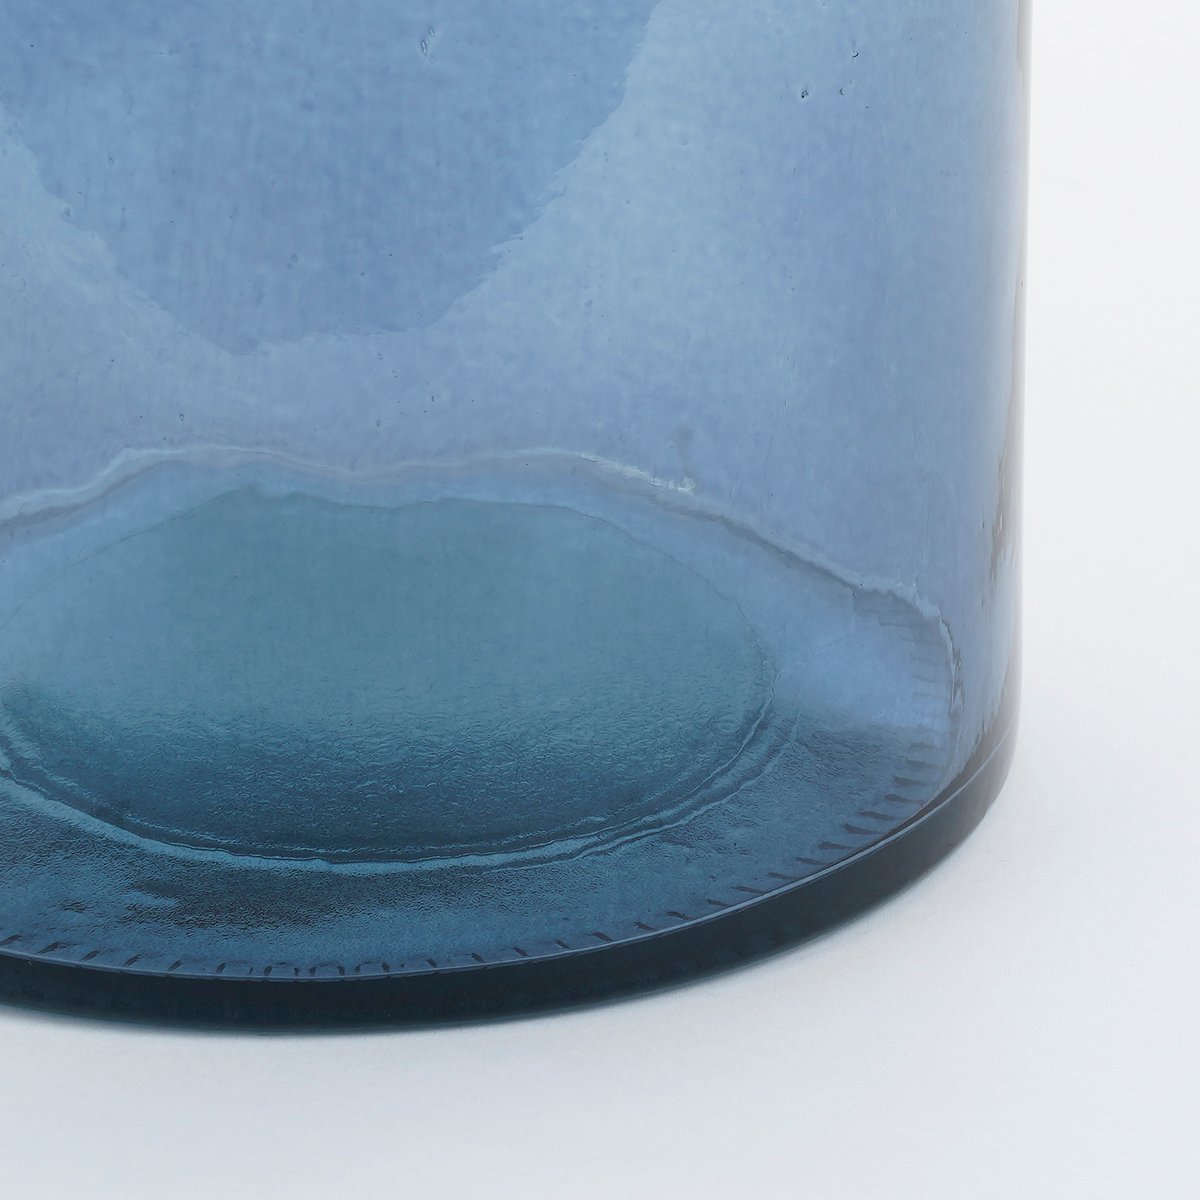 Guan Bottle Vase - H40 x Ø15 cm - Recycled Glass - Blue